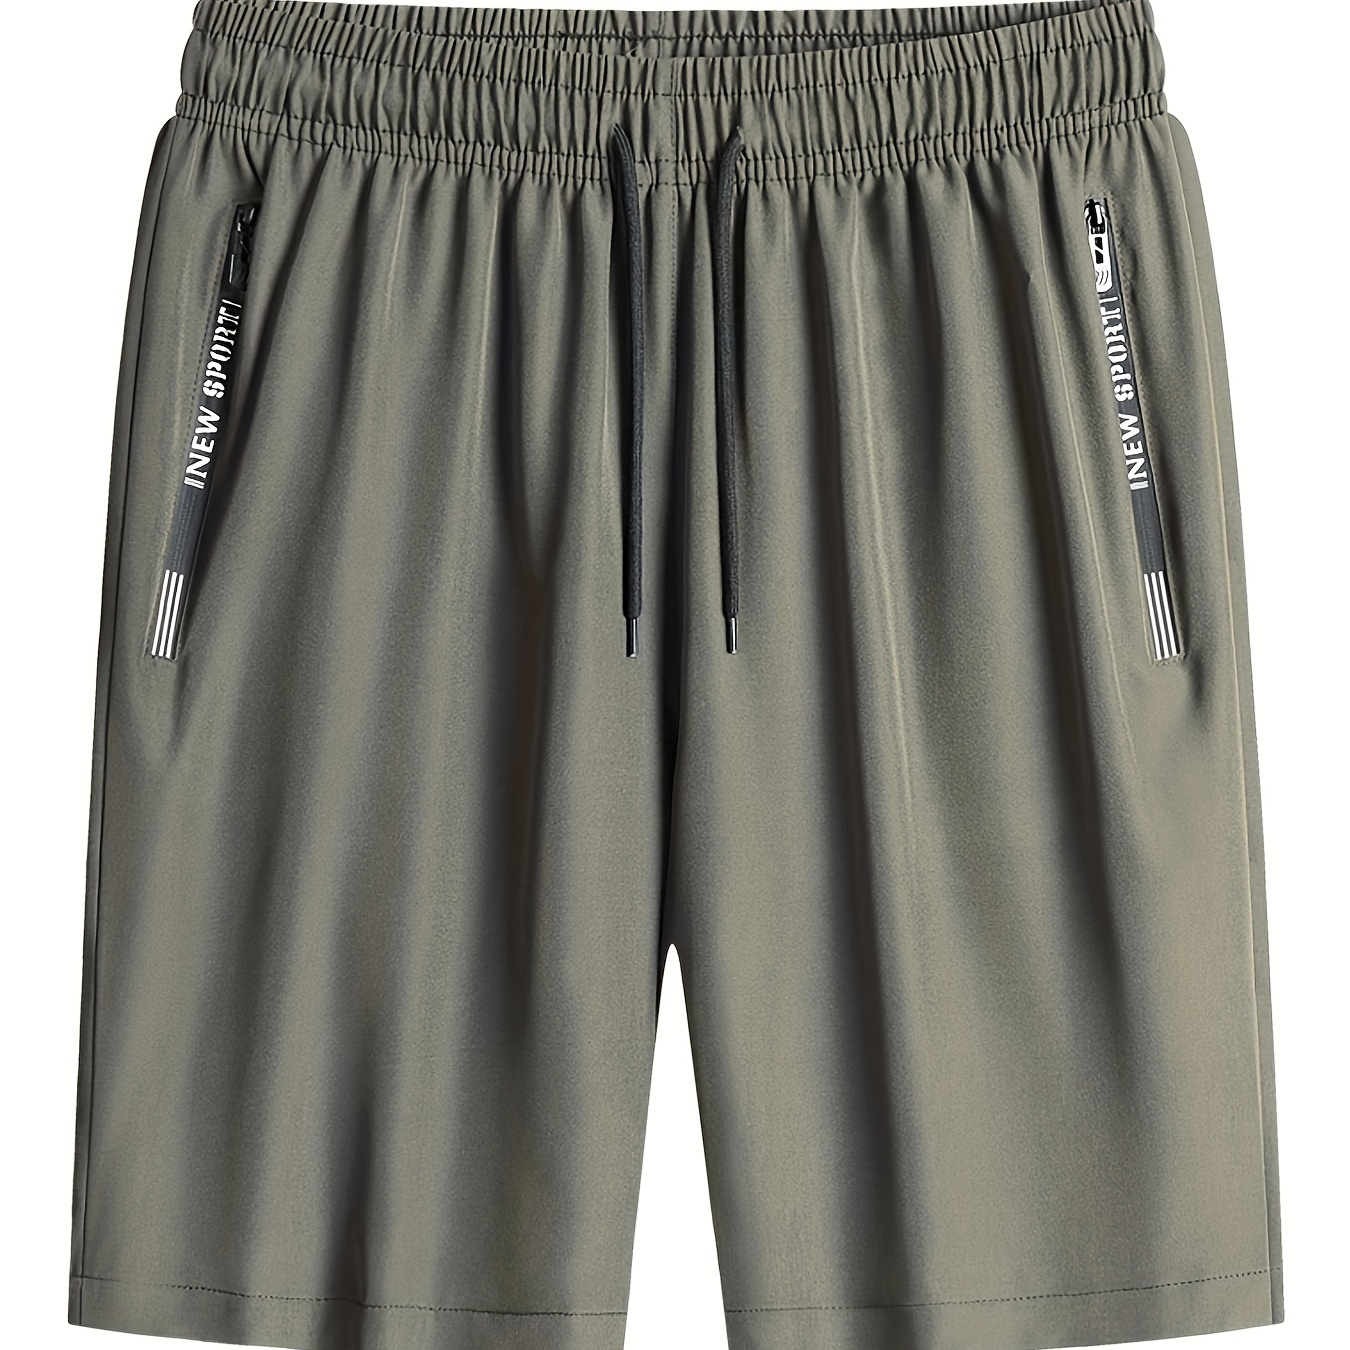 

Zipper Pocket Comfy Shorts, Men's Casual Slightly Stretch Elastic Waist Drawstring Shorts For Summer Basketball Beach Resort, Bermuda Shorts